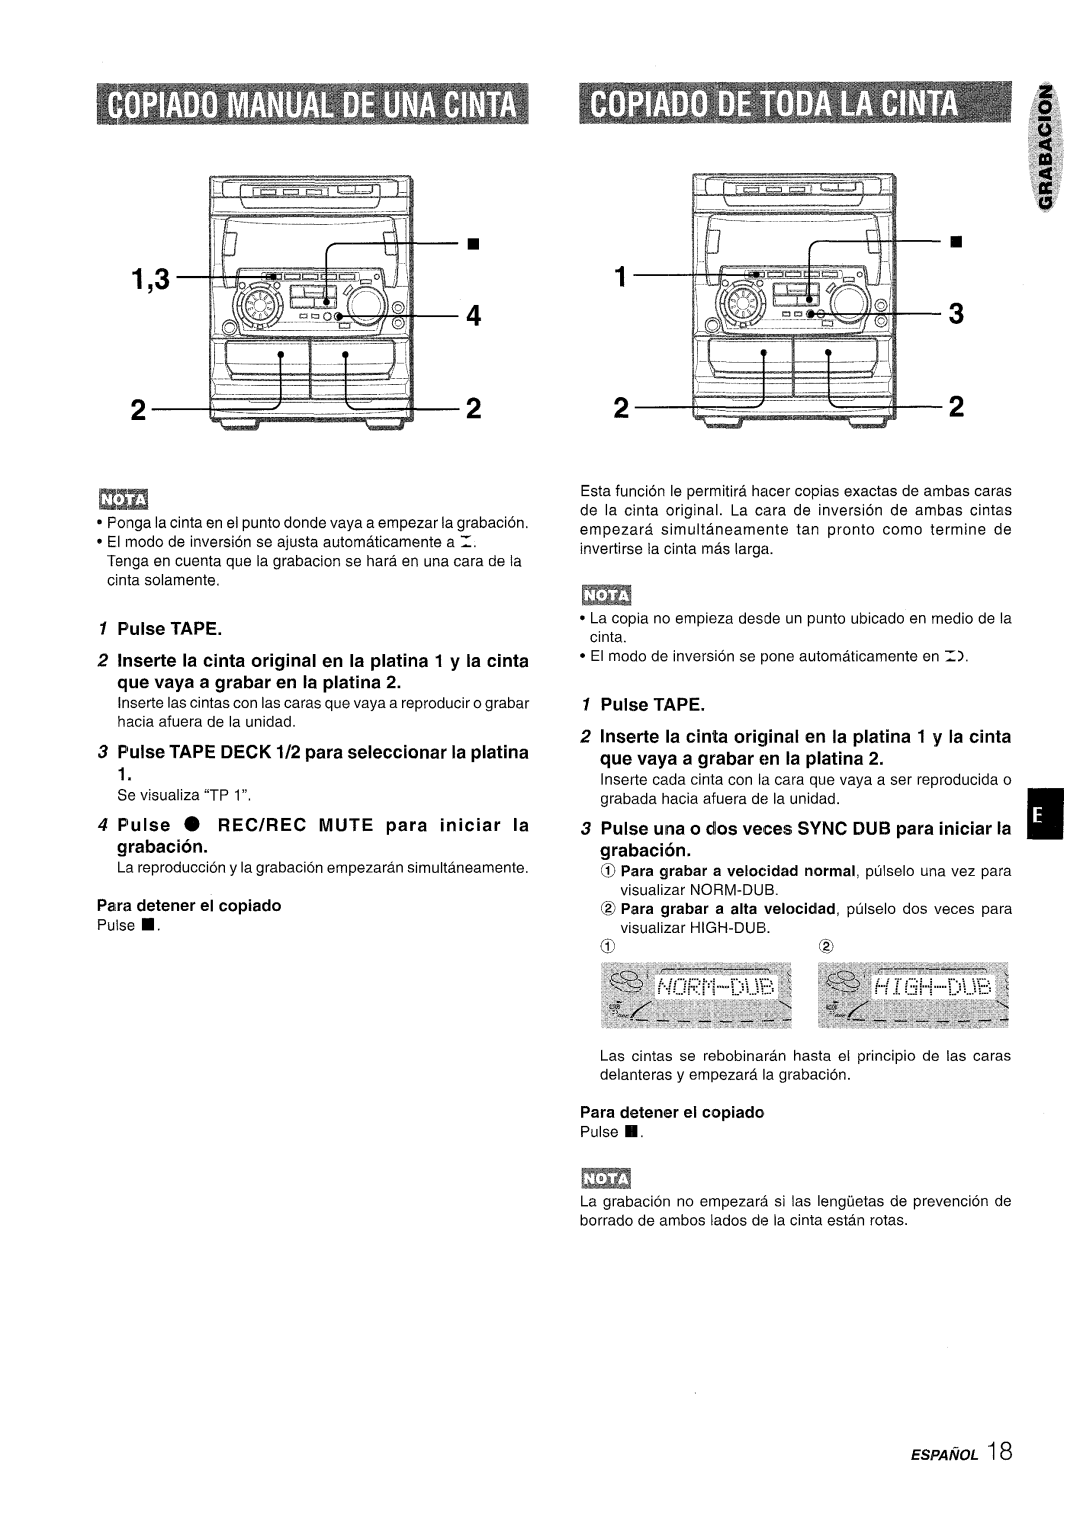 Sony NSX-A707 manual 11-Ld-.--.-b- J-1, 1 P’ulse TAPE, 3 P’ulse TAPE DECK 1/2 para seleccionar la platina, Pulse TAPE 